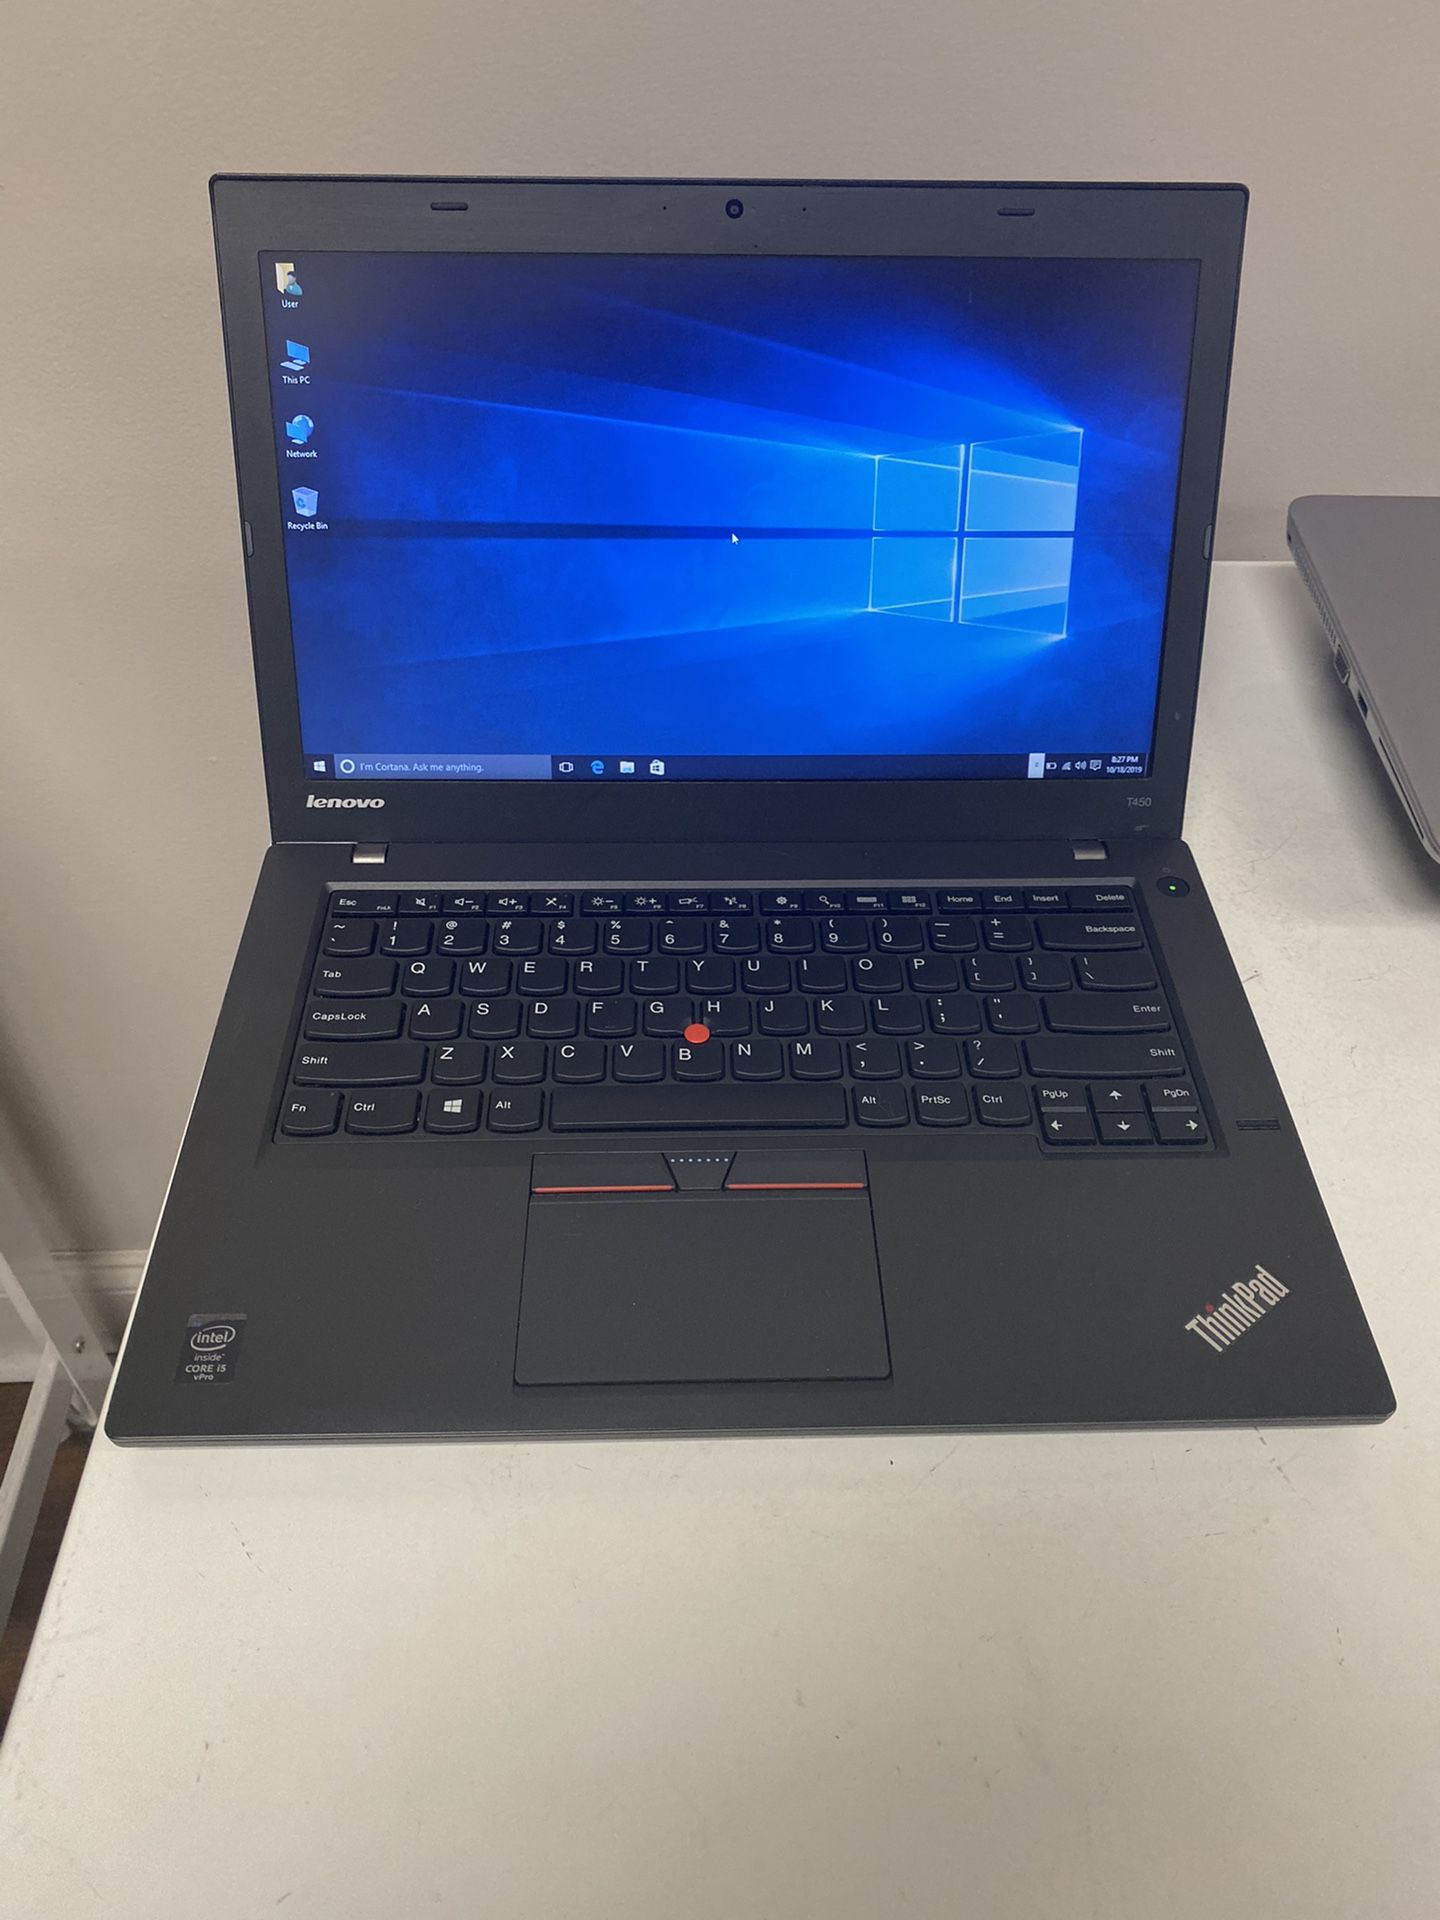 Lenovo ThinkPad T450 14” 2.49ghz Core i5-4300U 8gb RAM 256gb SSD Webcam WiFi Windows 10 Pro